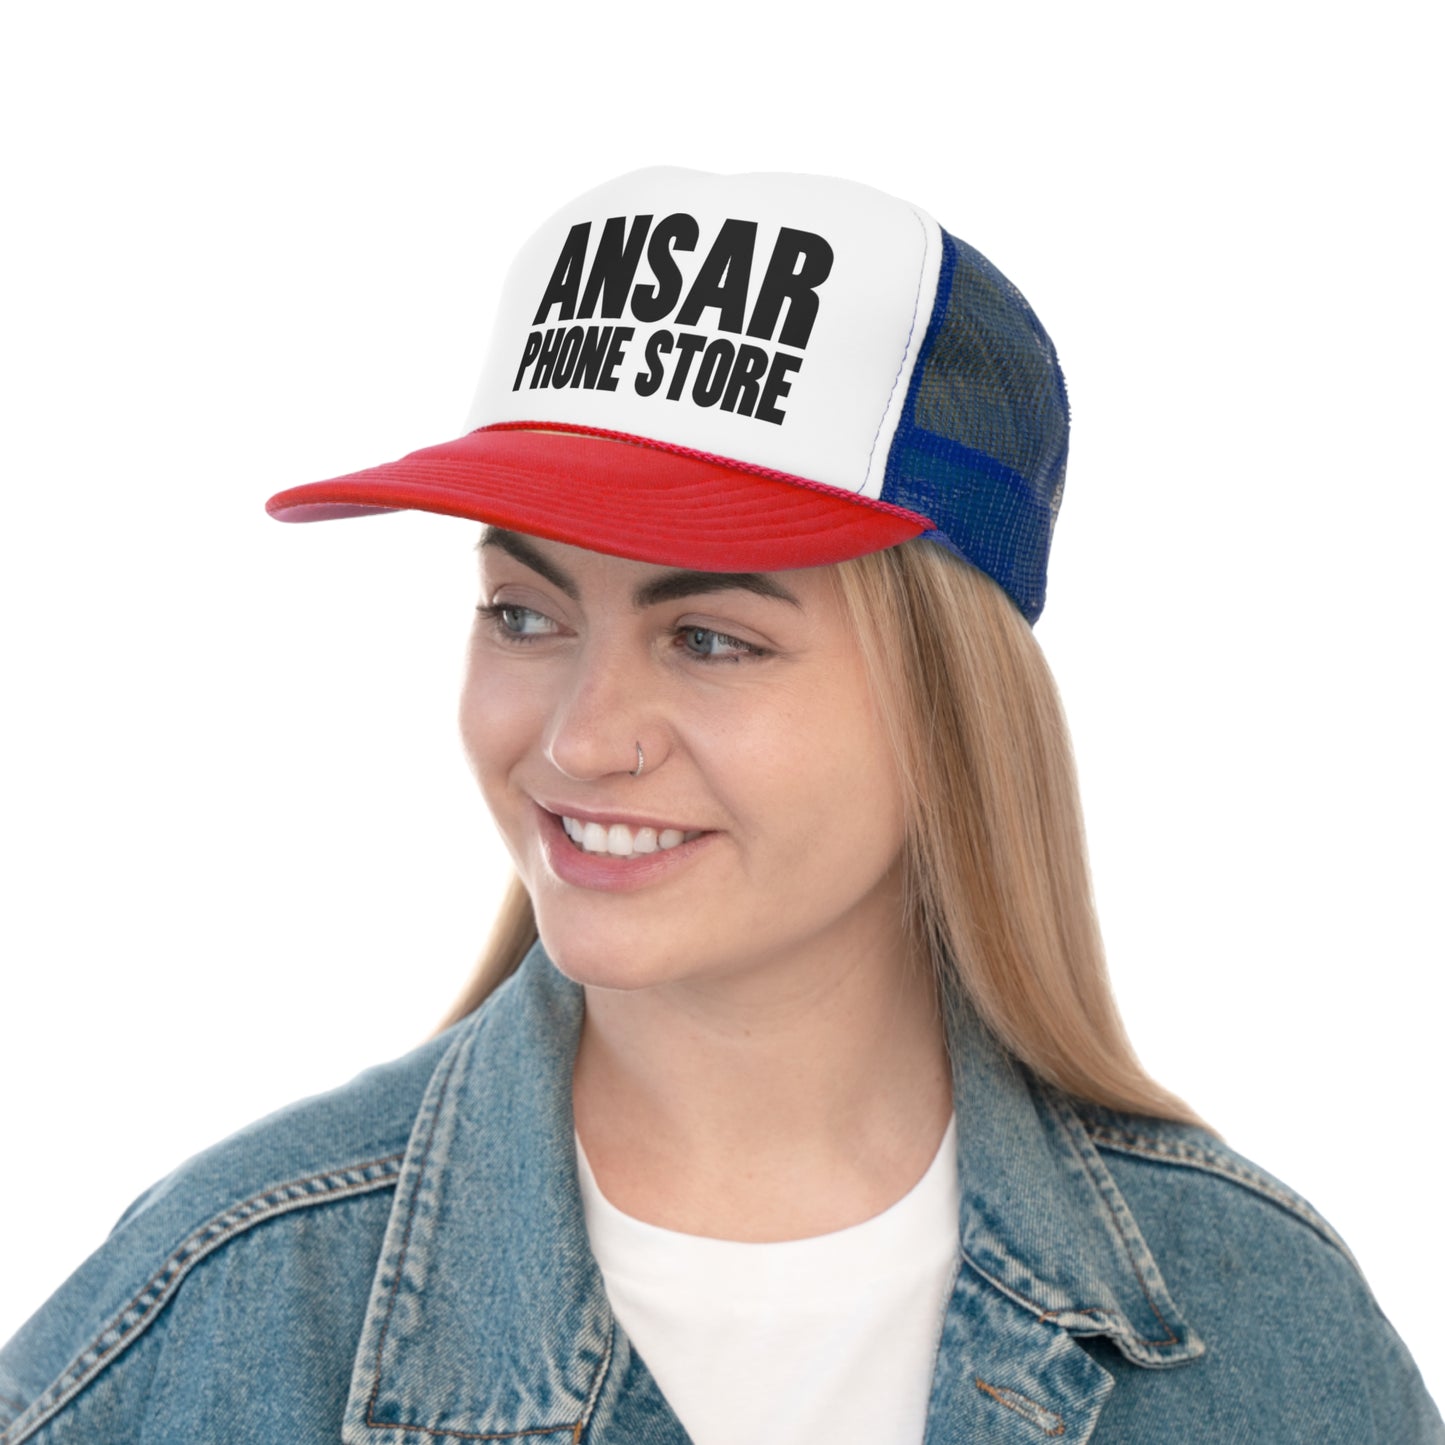 ANSAR Phone Store Hat